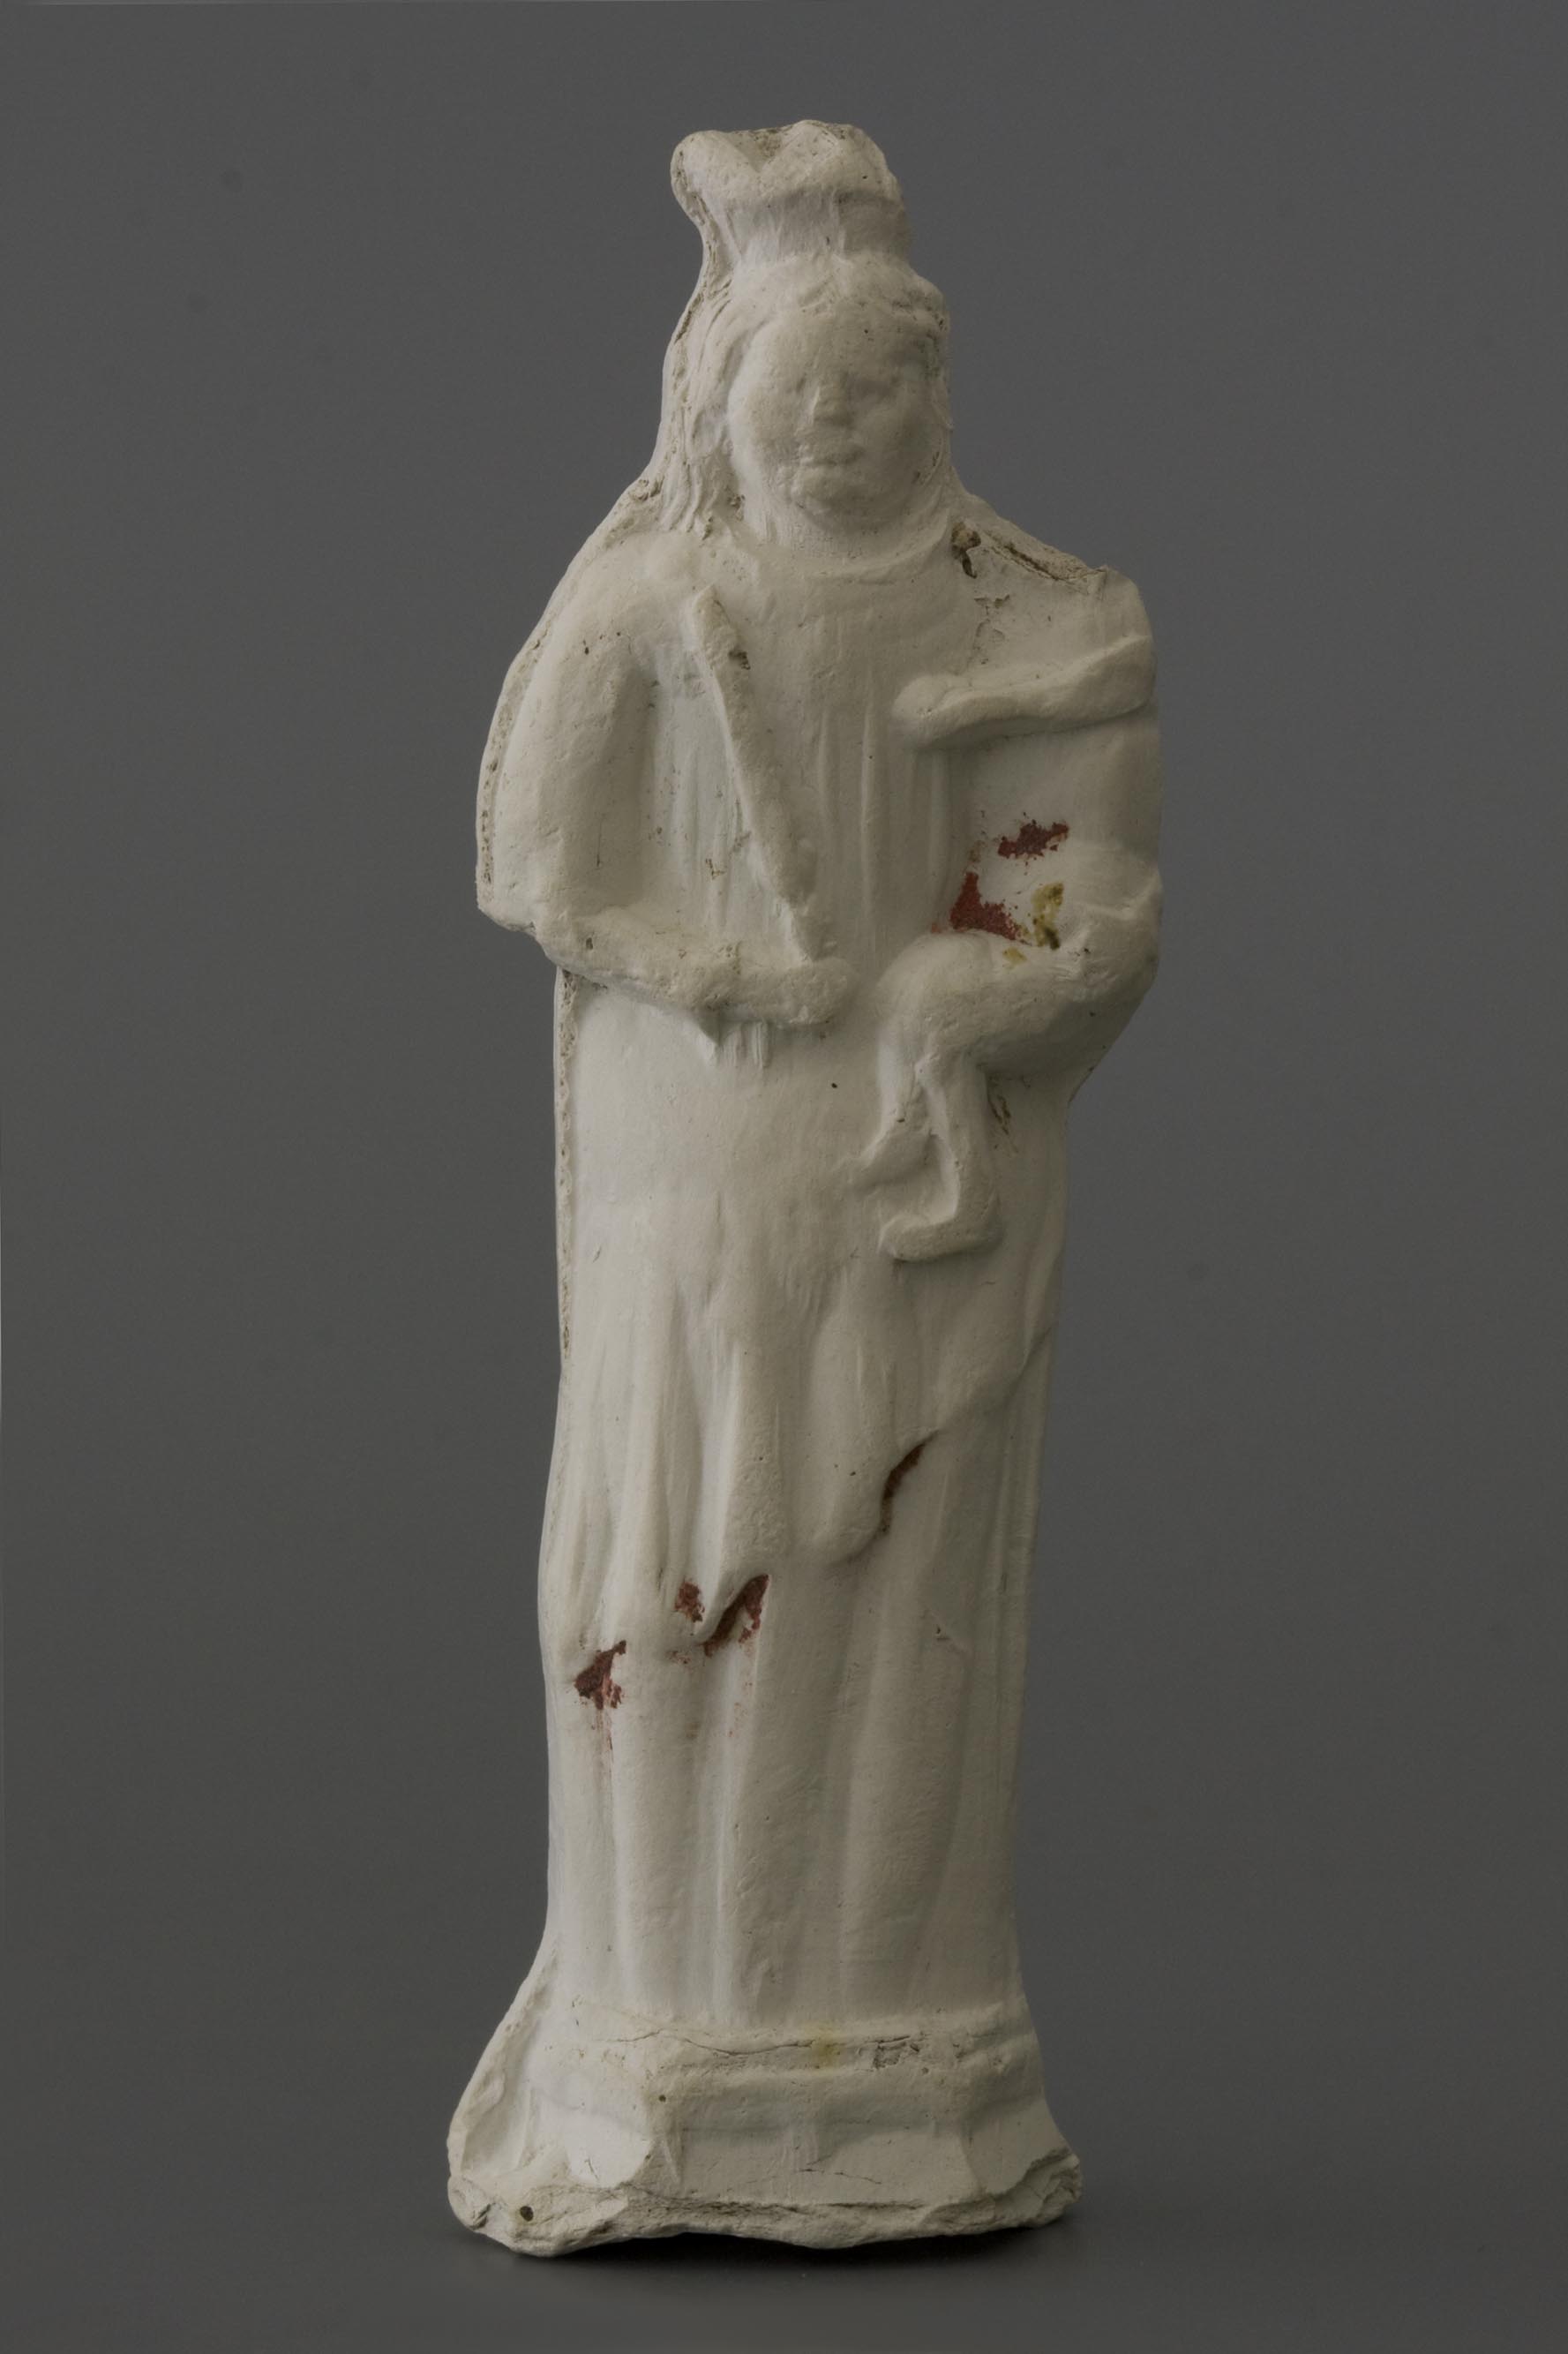 11-16.841-pipeclay-figurine-madonna-1